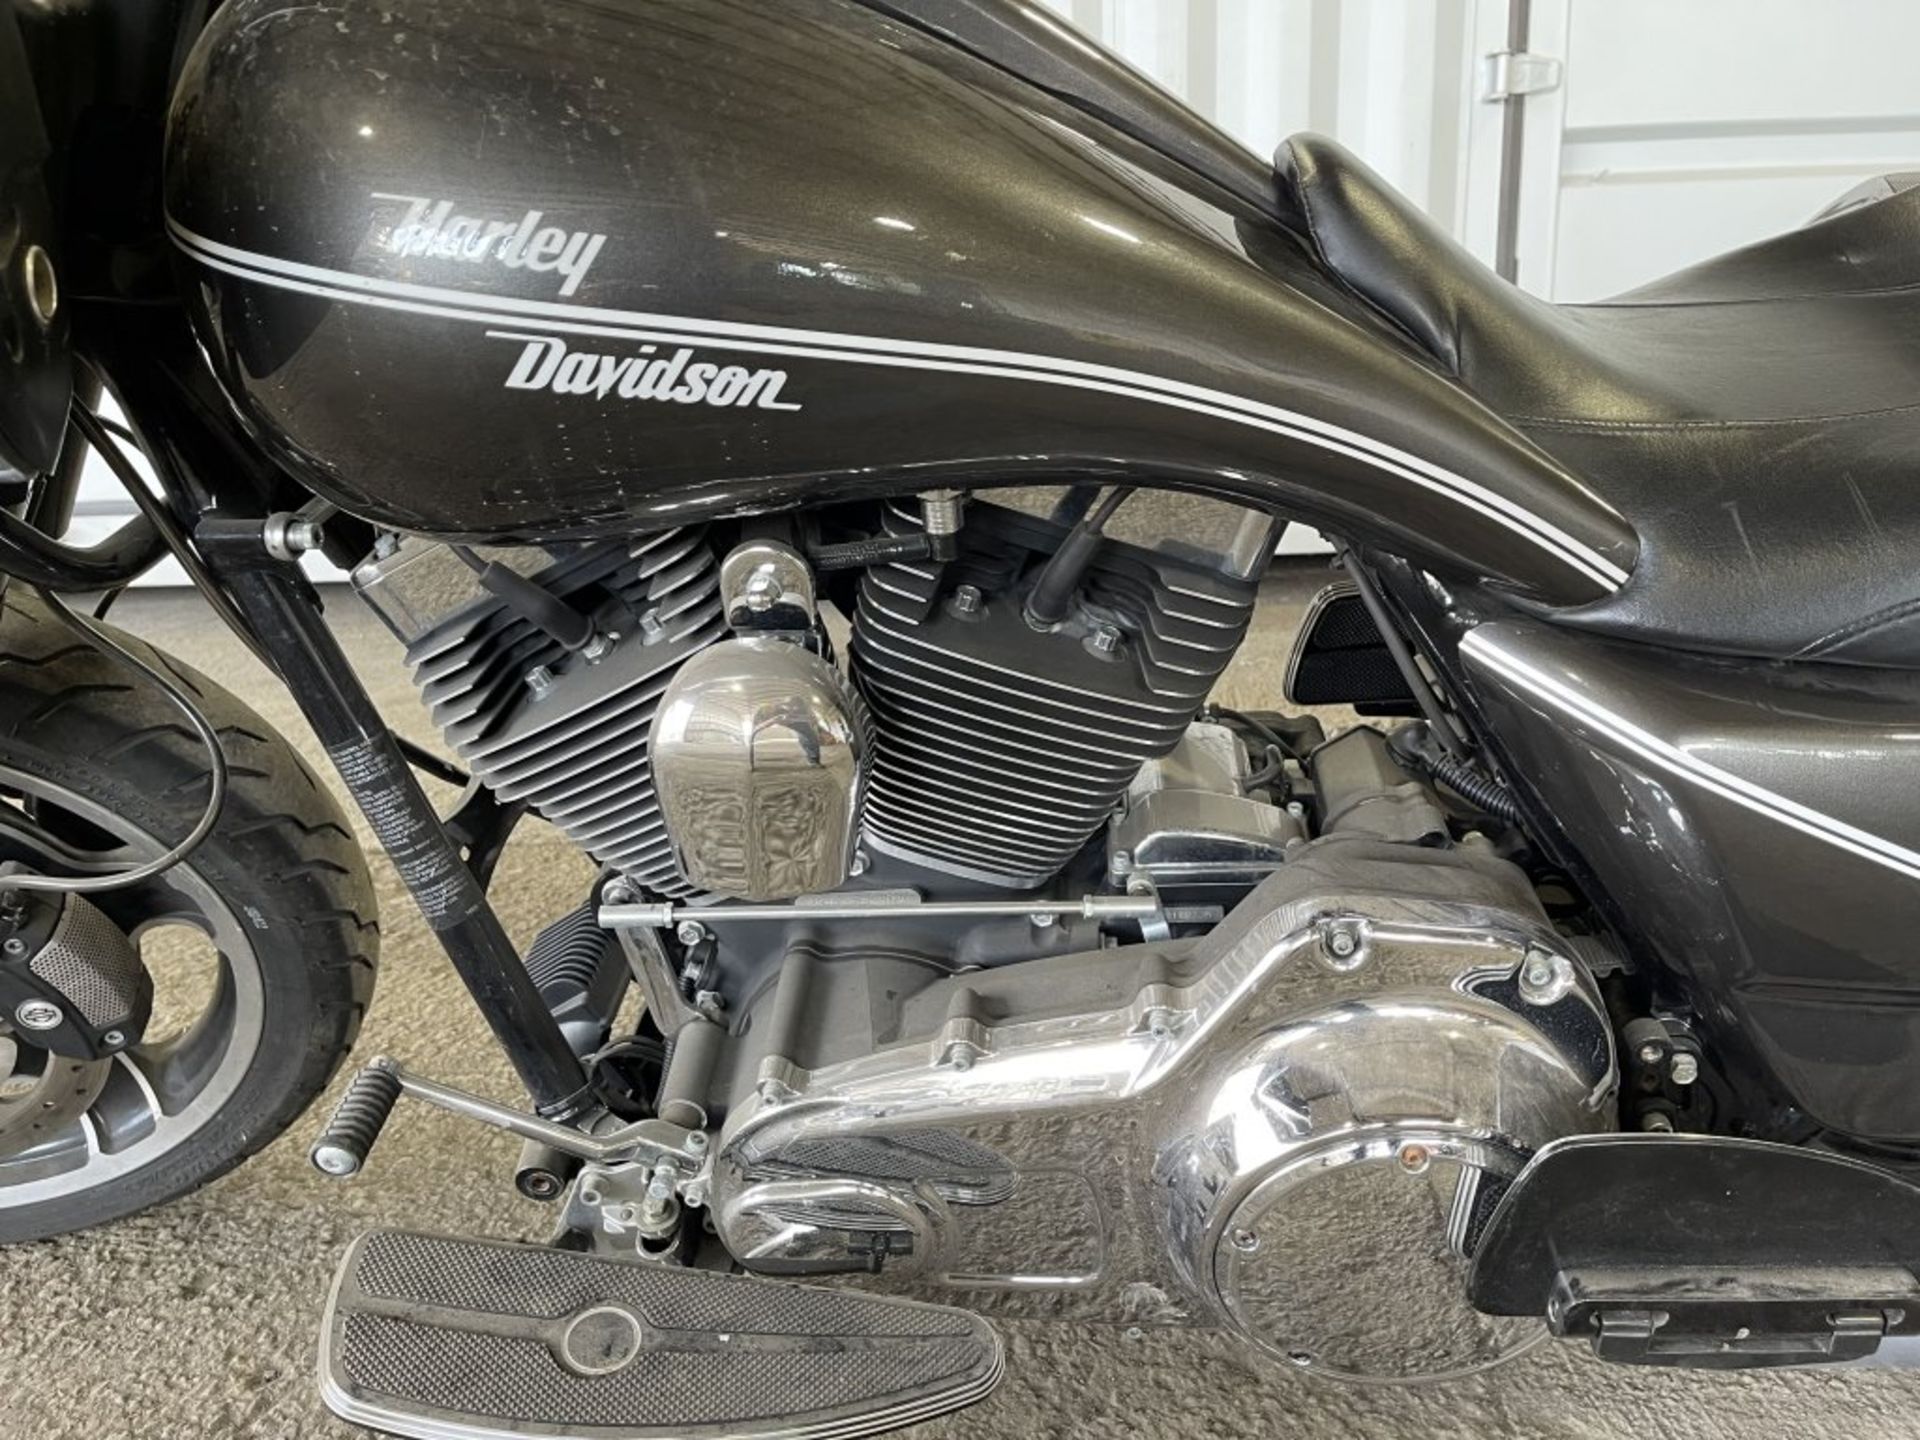 2010 Harley Davidson Road Glide Custom Motorcycle - Bild 9 aus 18